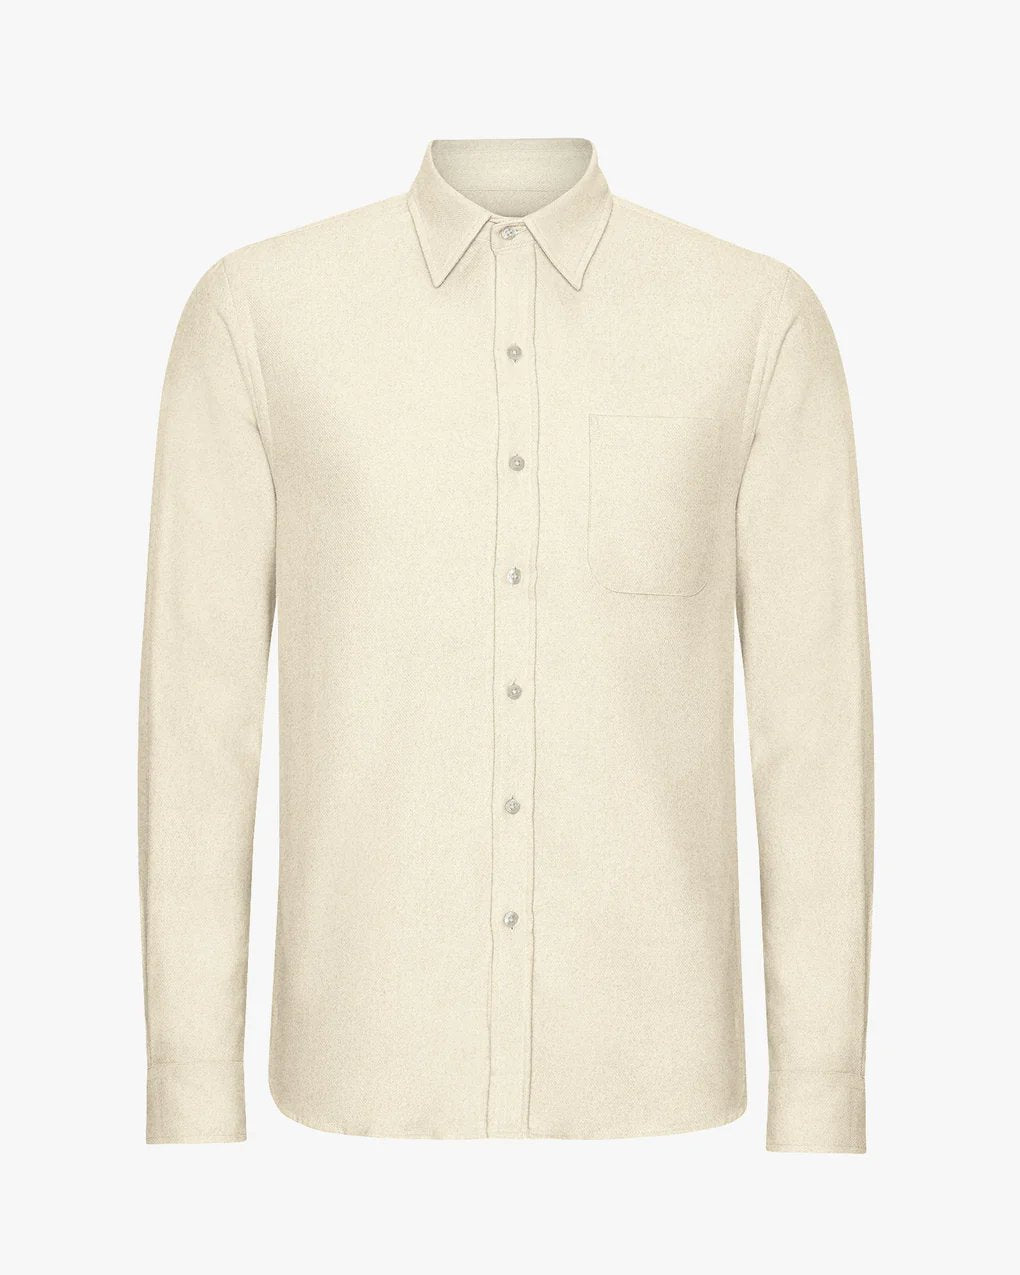 Organic Flannel Shirt - Colorful Standard - Danali - CS4006-IvoryWhite-M